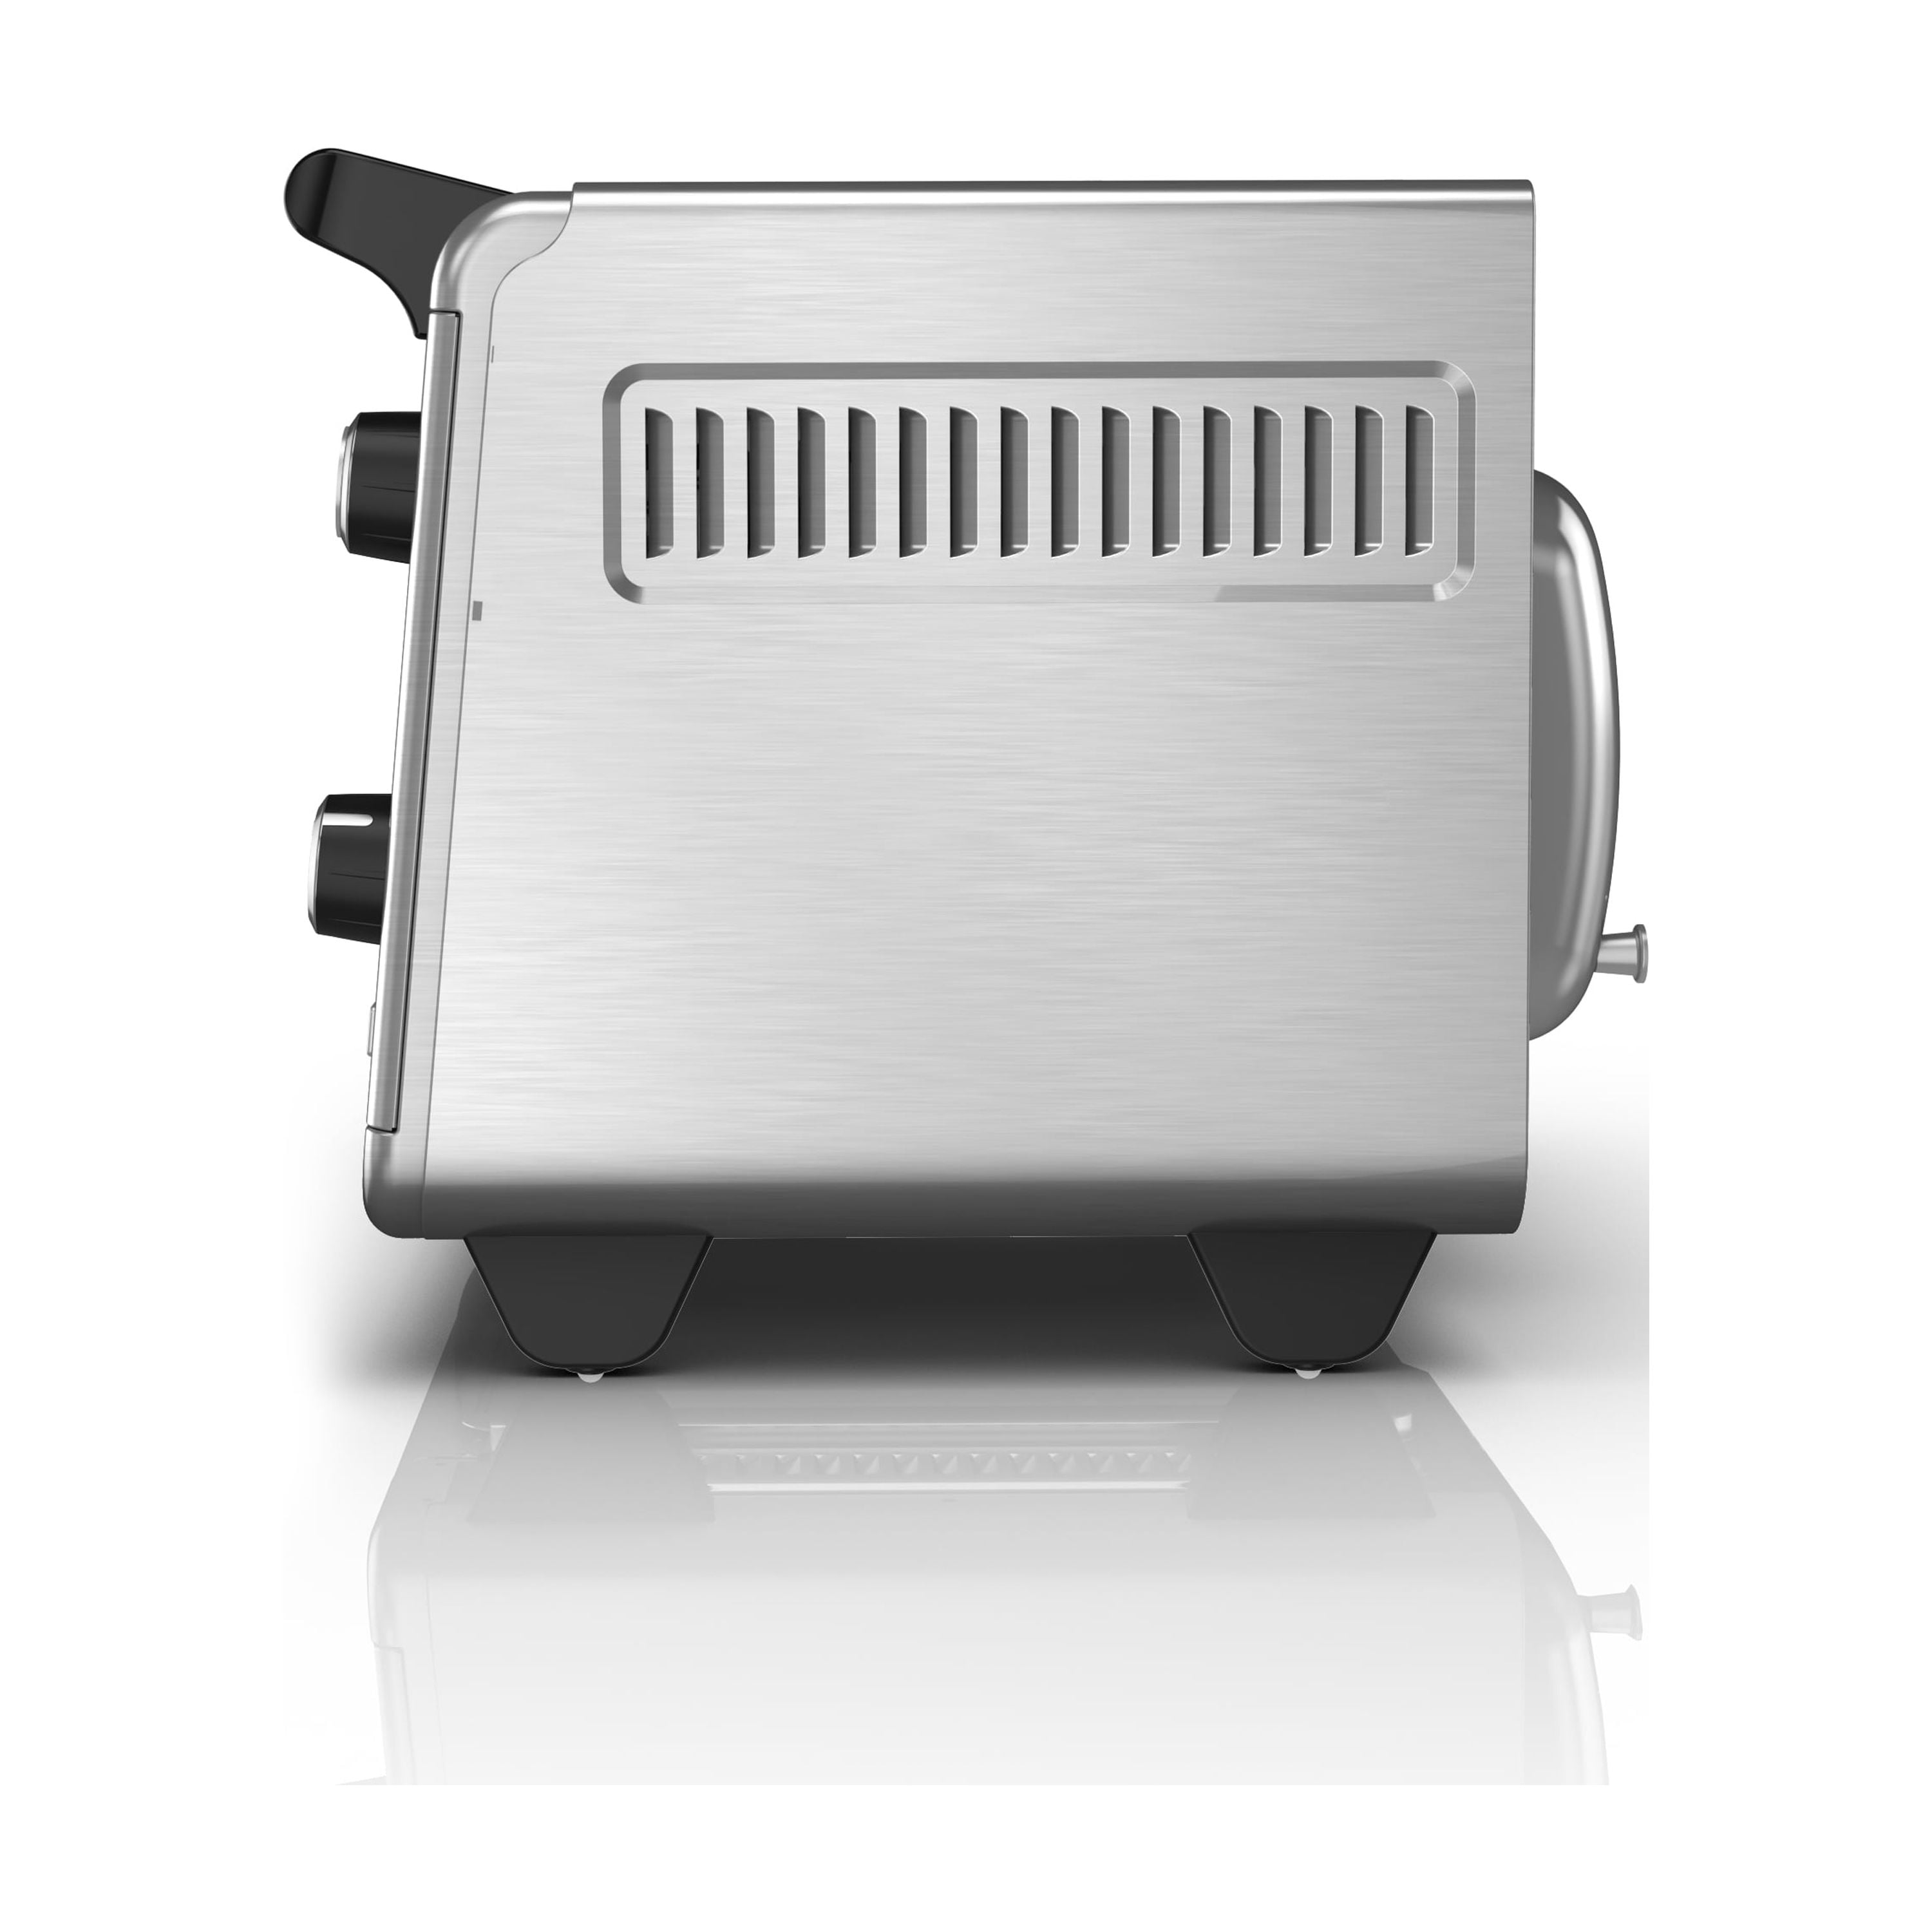 Black & Decker 6-Slice Convection Toaster Oven CTO4400B Reviews –